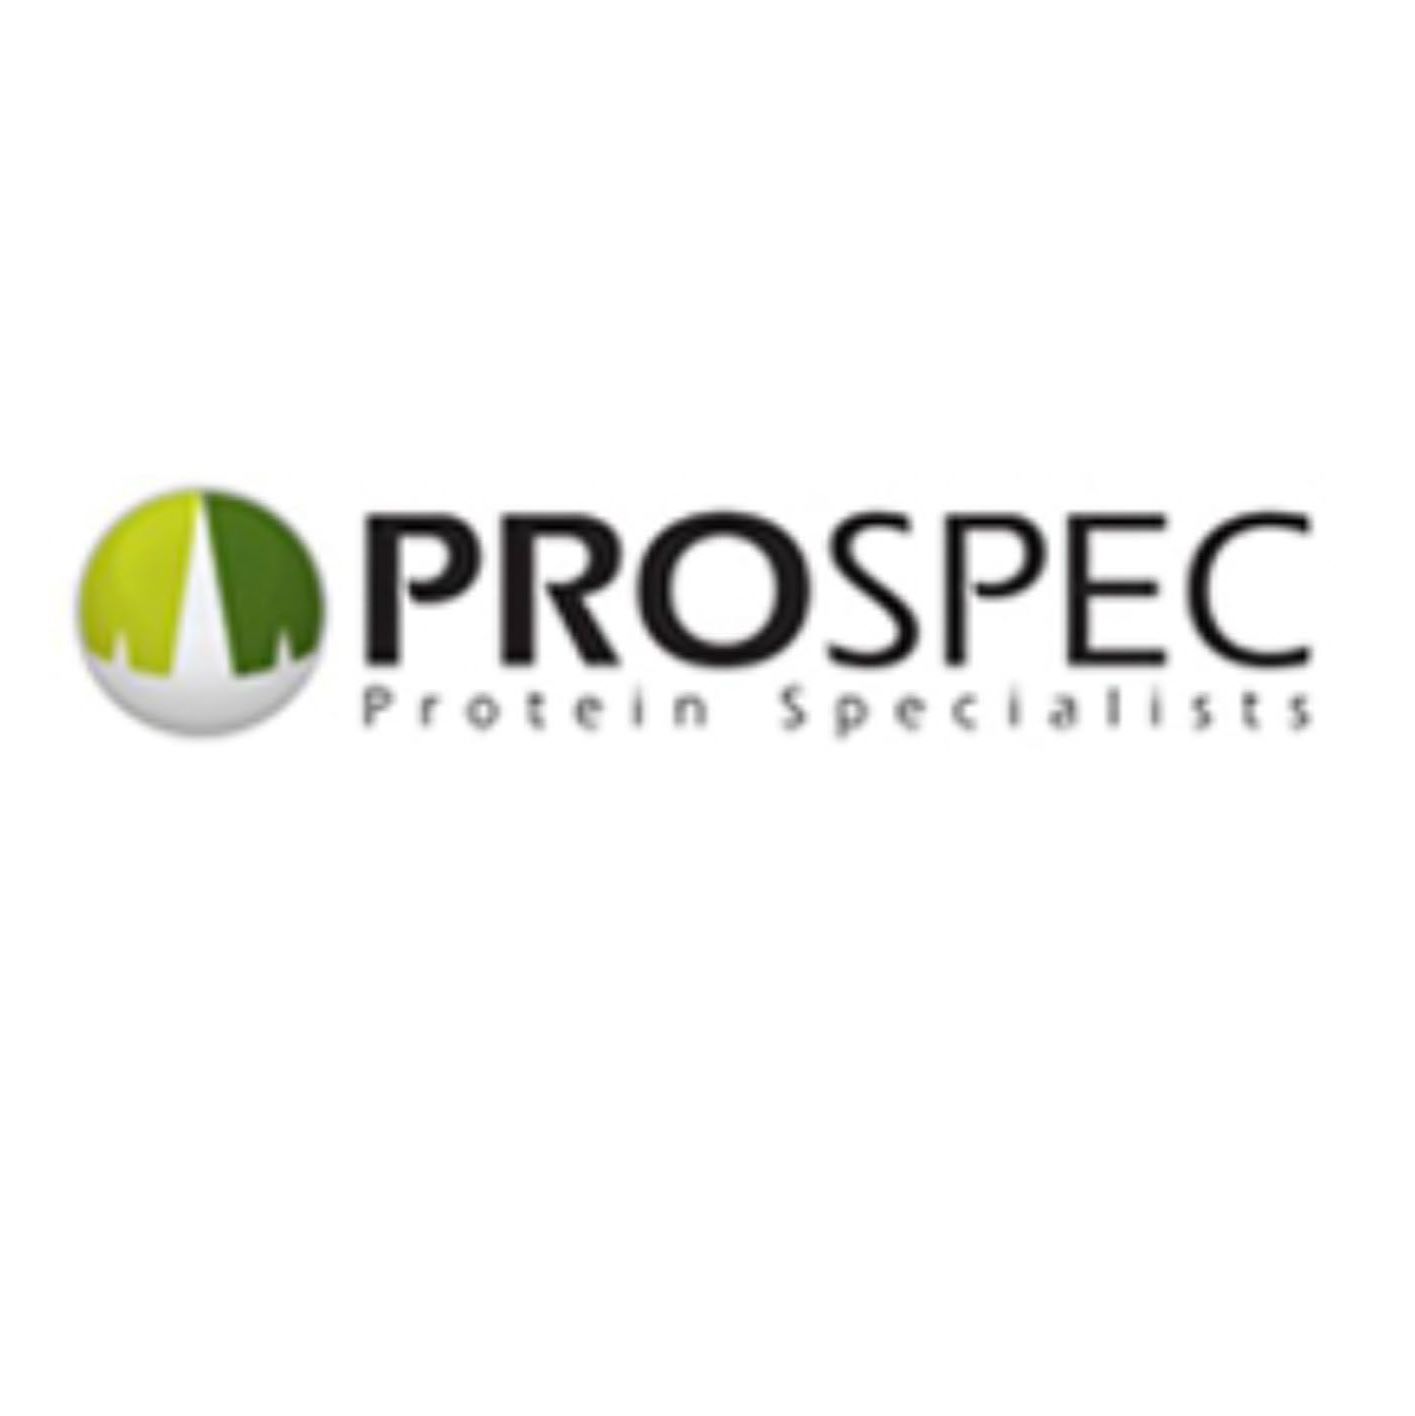 ProSpec-Tany  神经科学、蛋白酶及干细胞研究